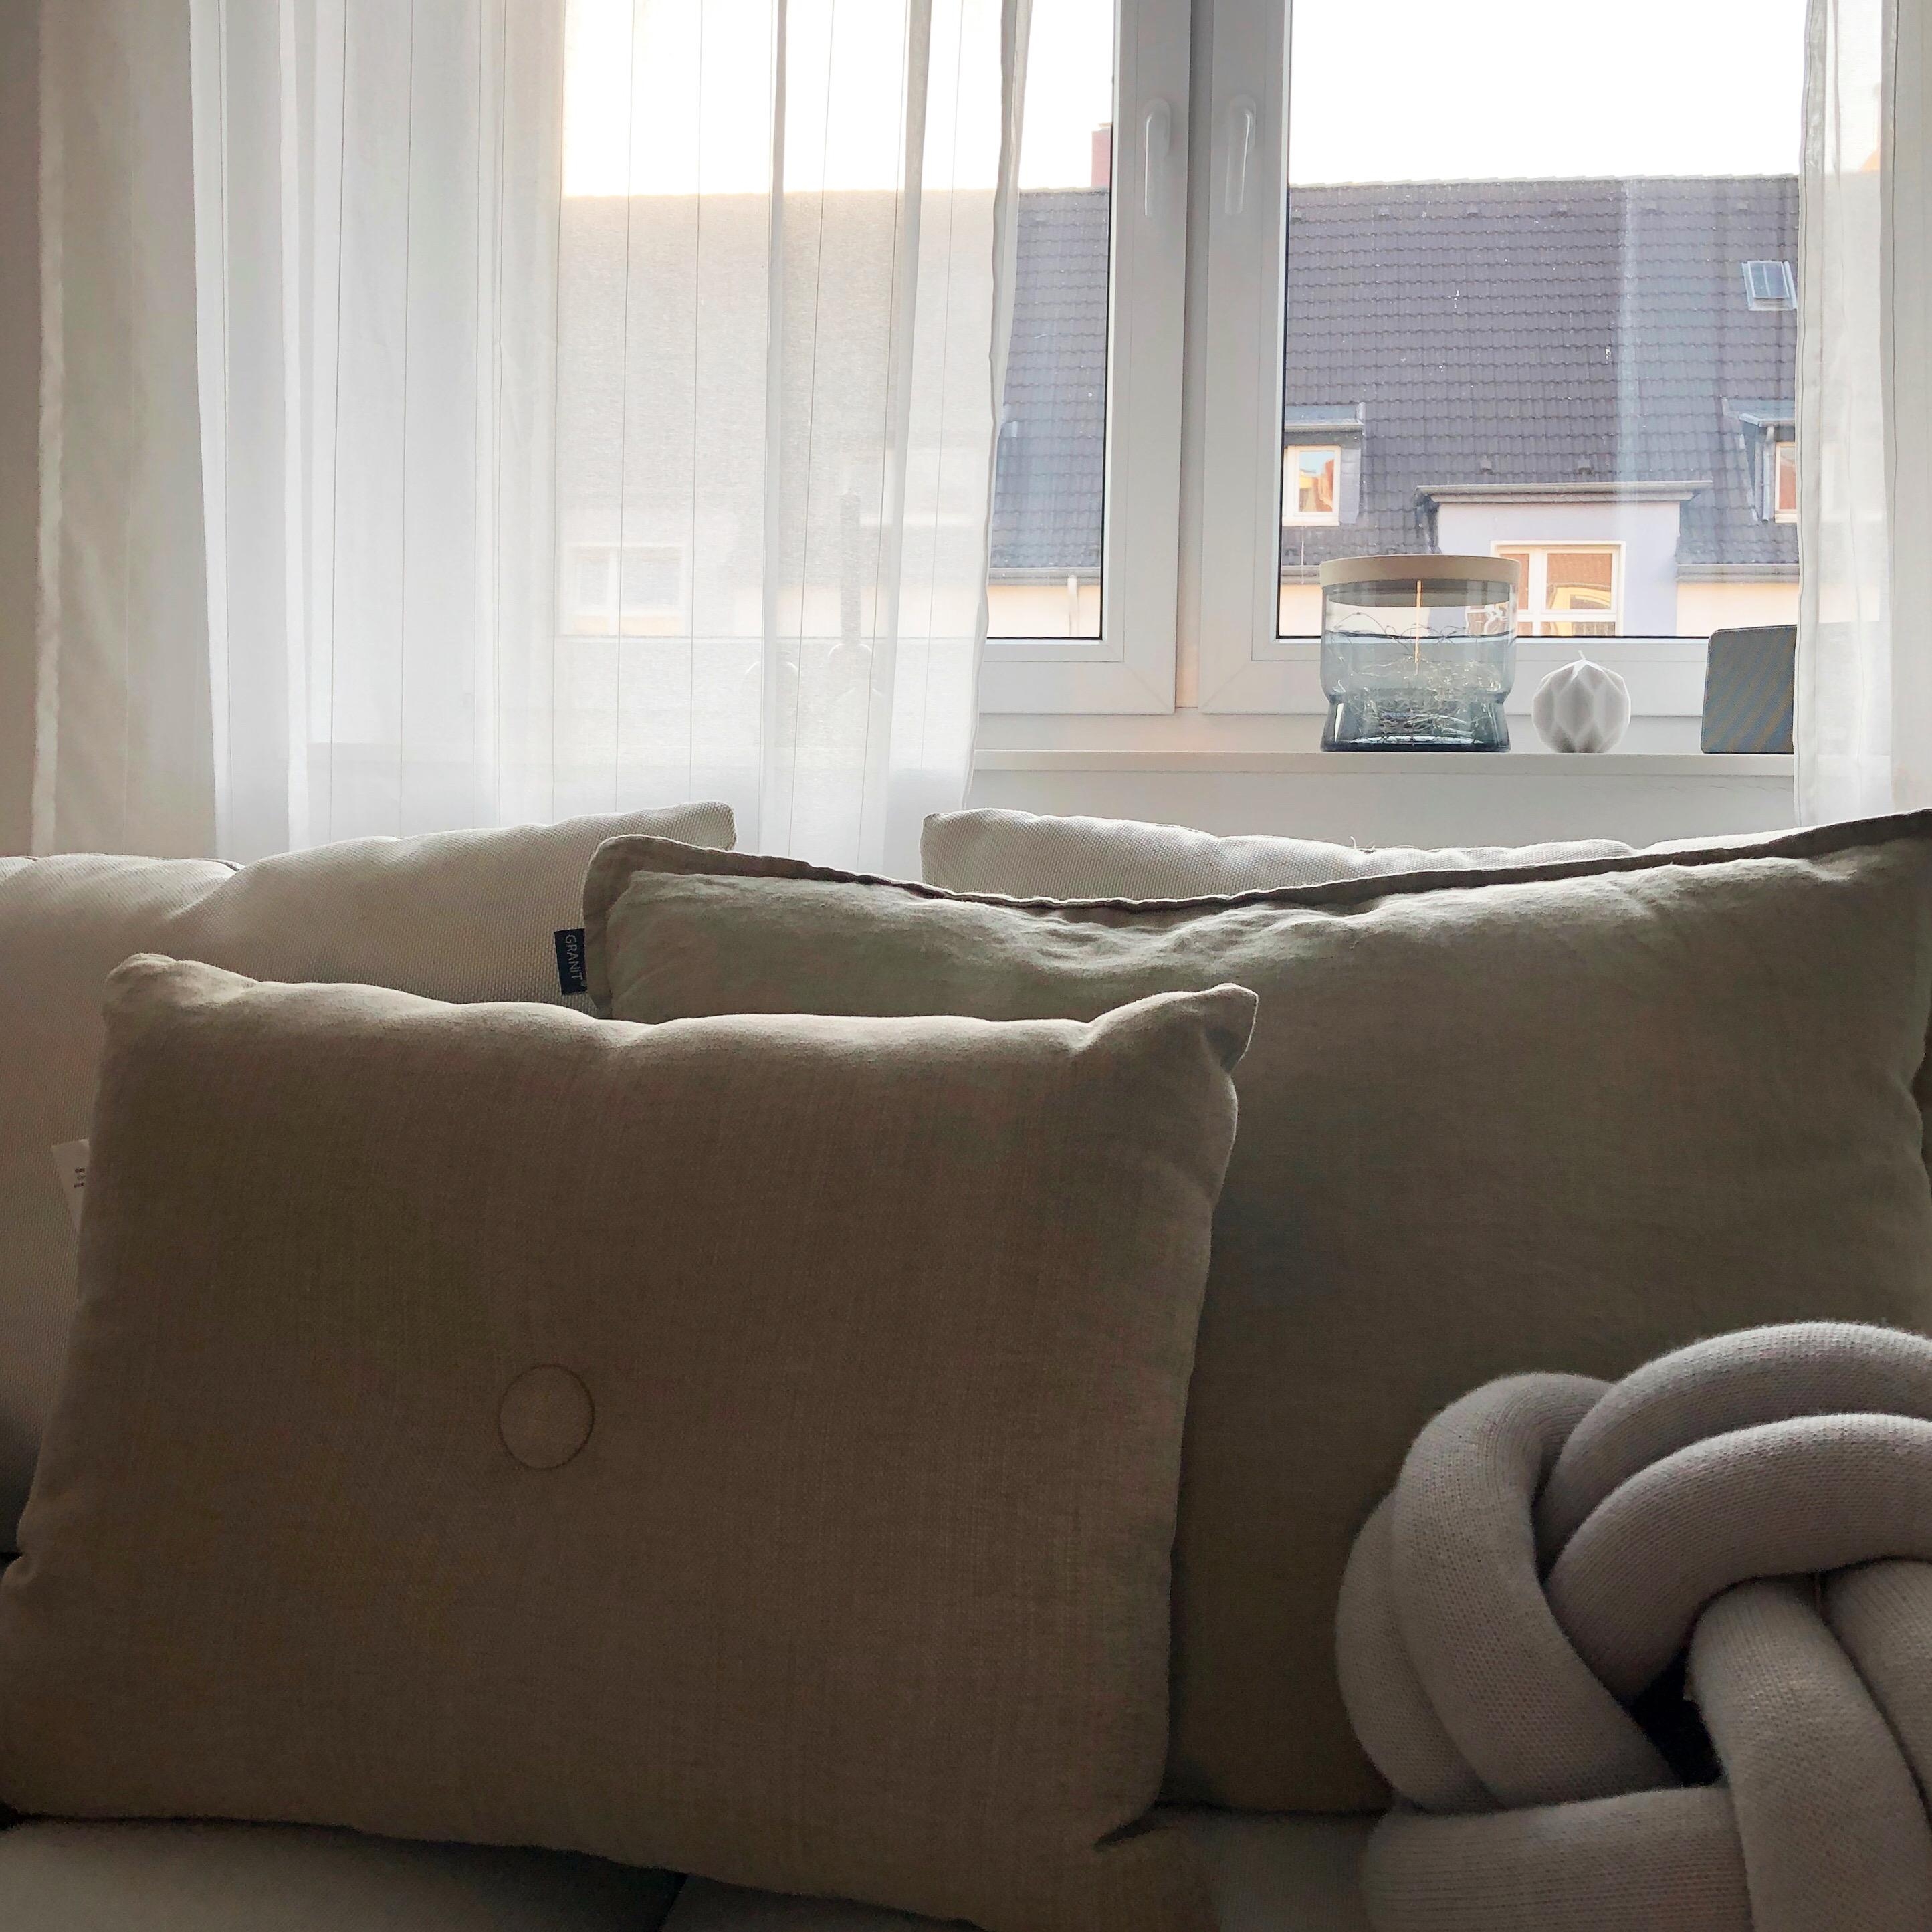 #sundays like this. 
#wohnzimmer #livingroom #deko #homedecor #couch #couchstyle #cozy